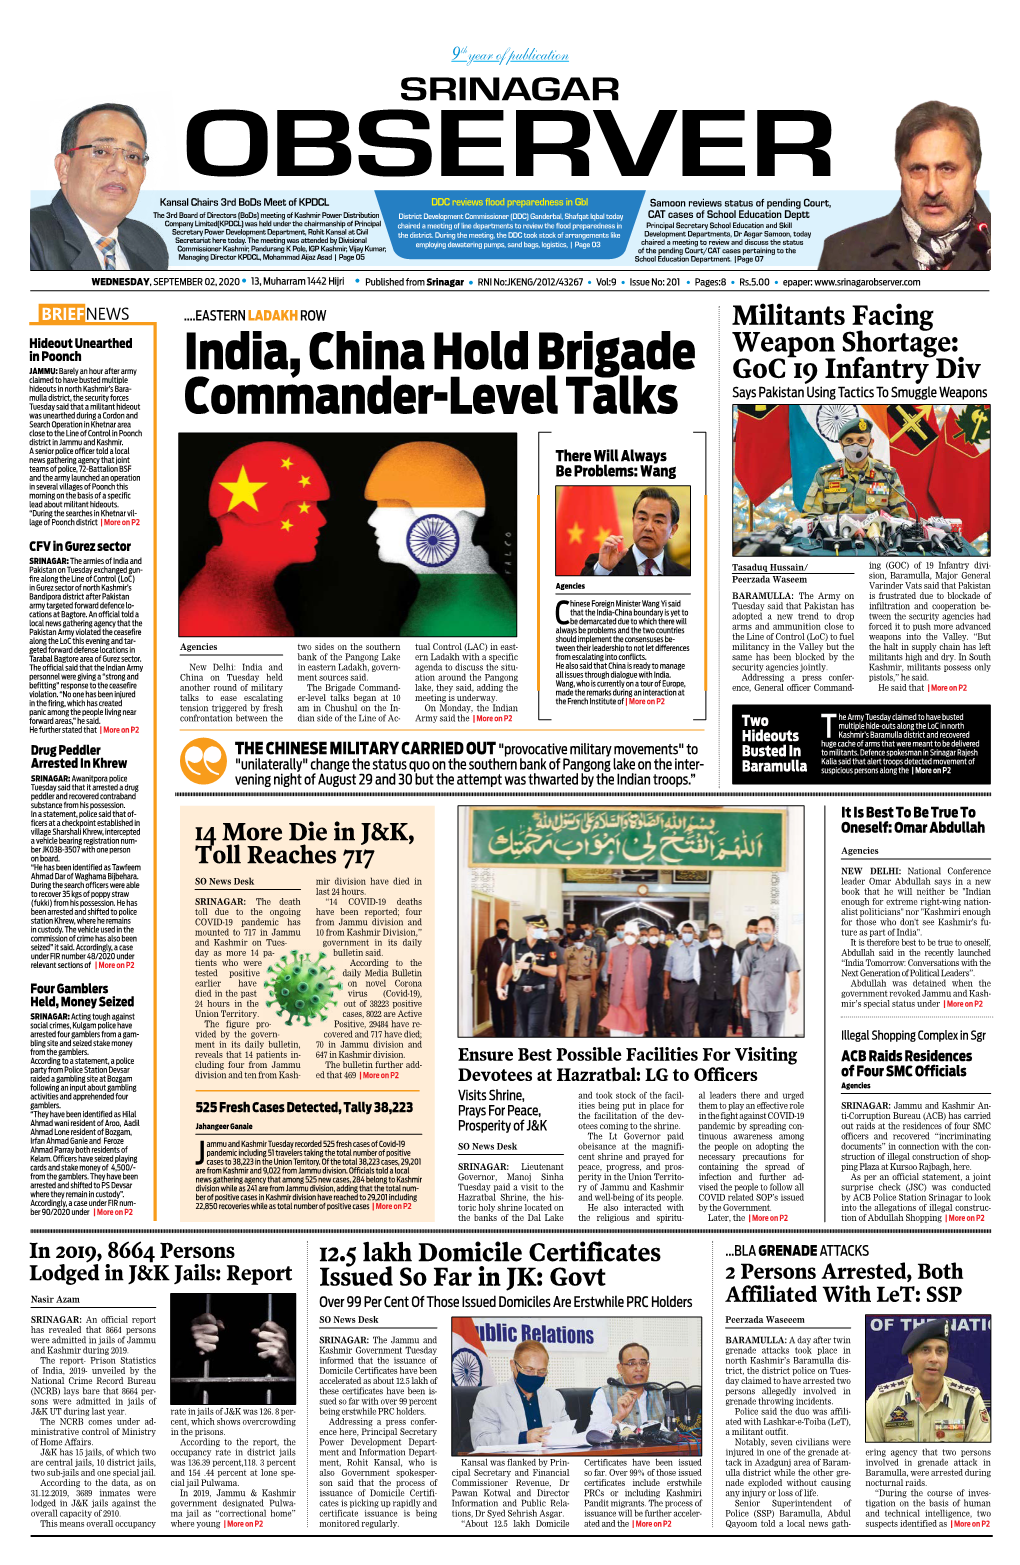 India, China Hold Brigade Commander-Level Talks